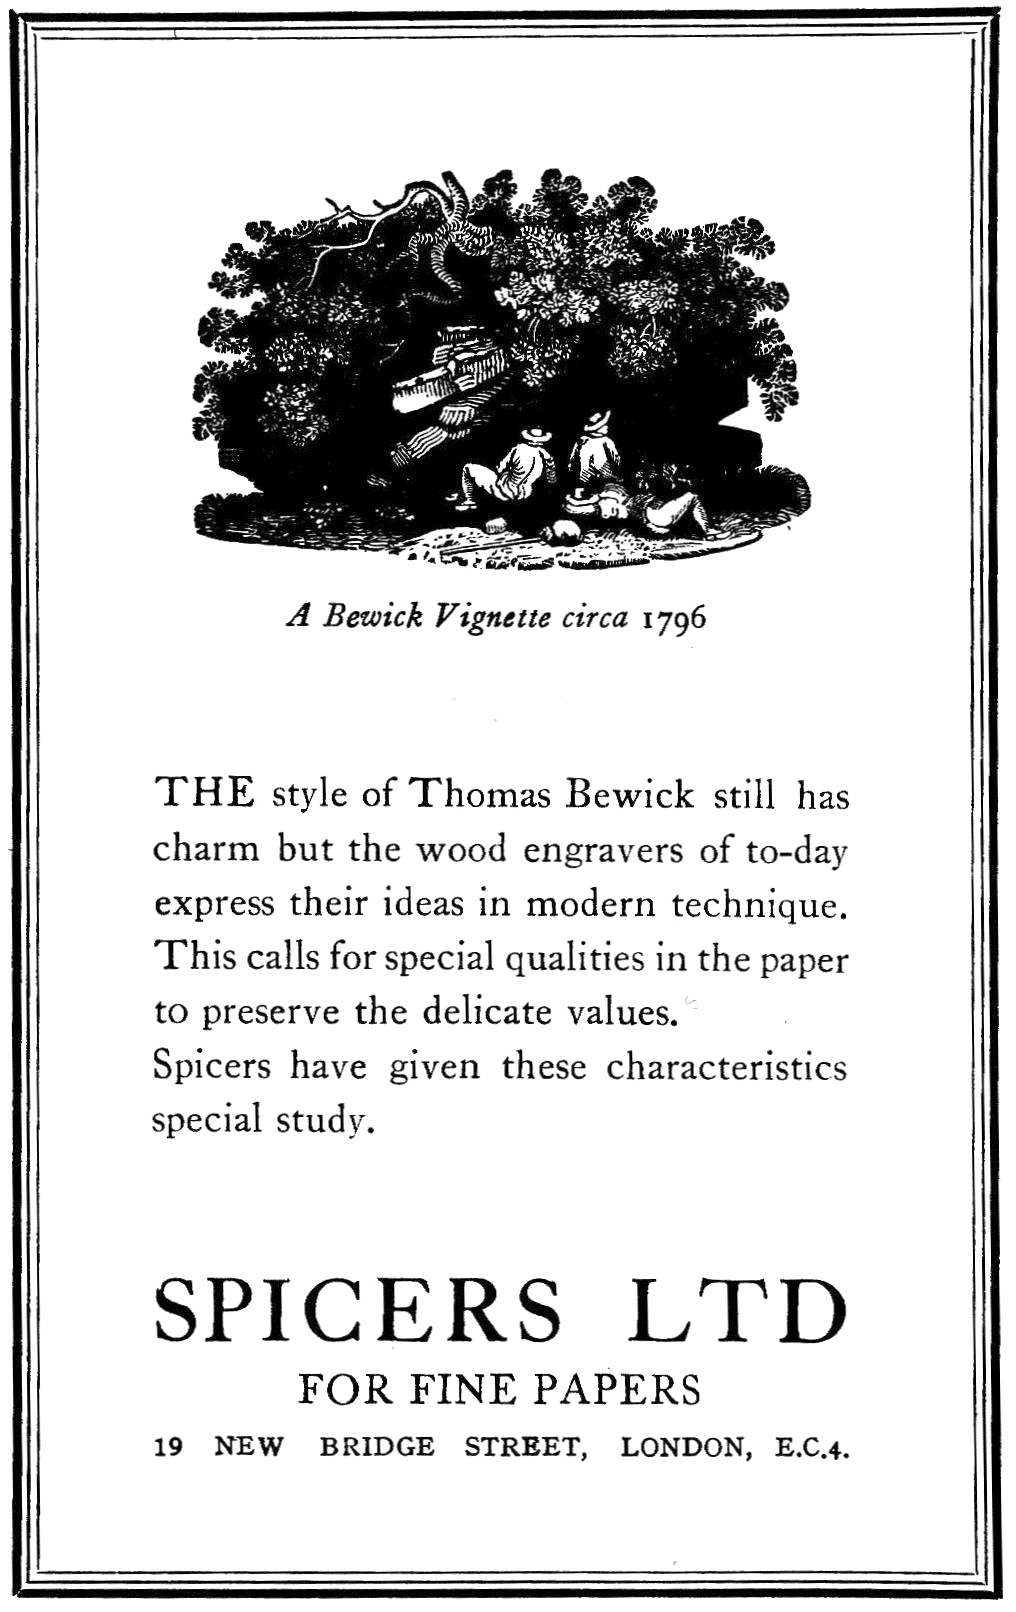 Spicers Ltd. advertisement